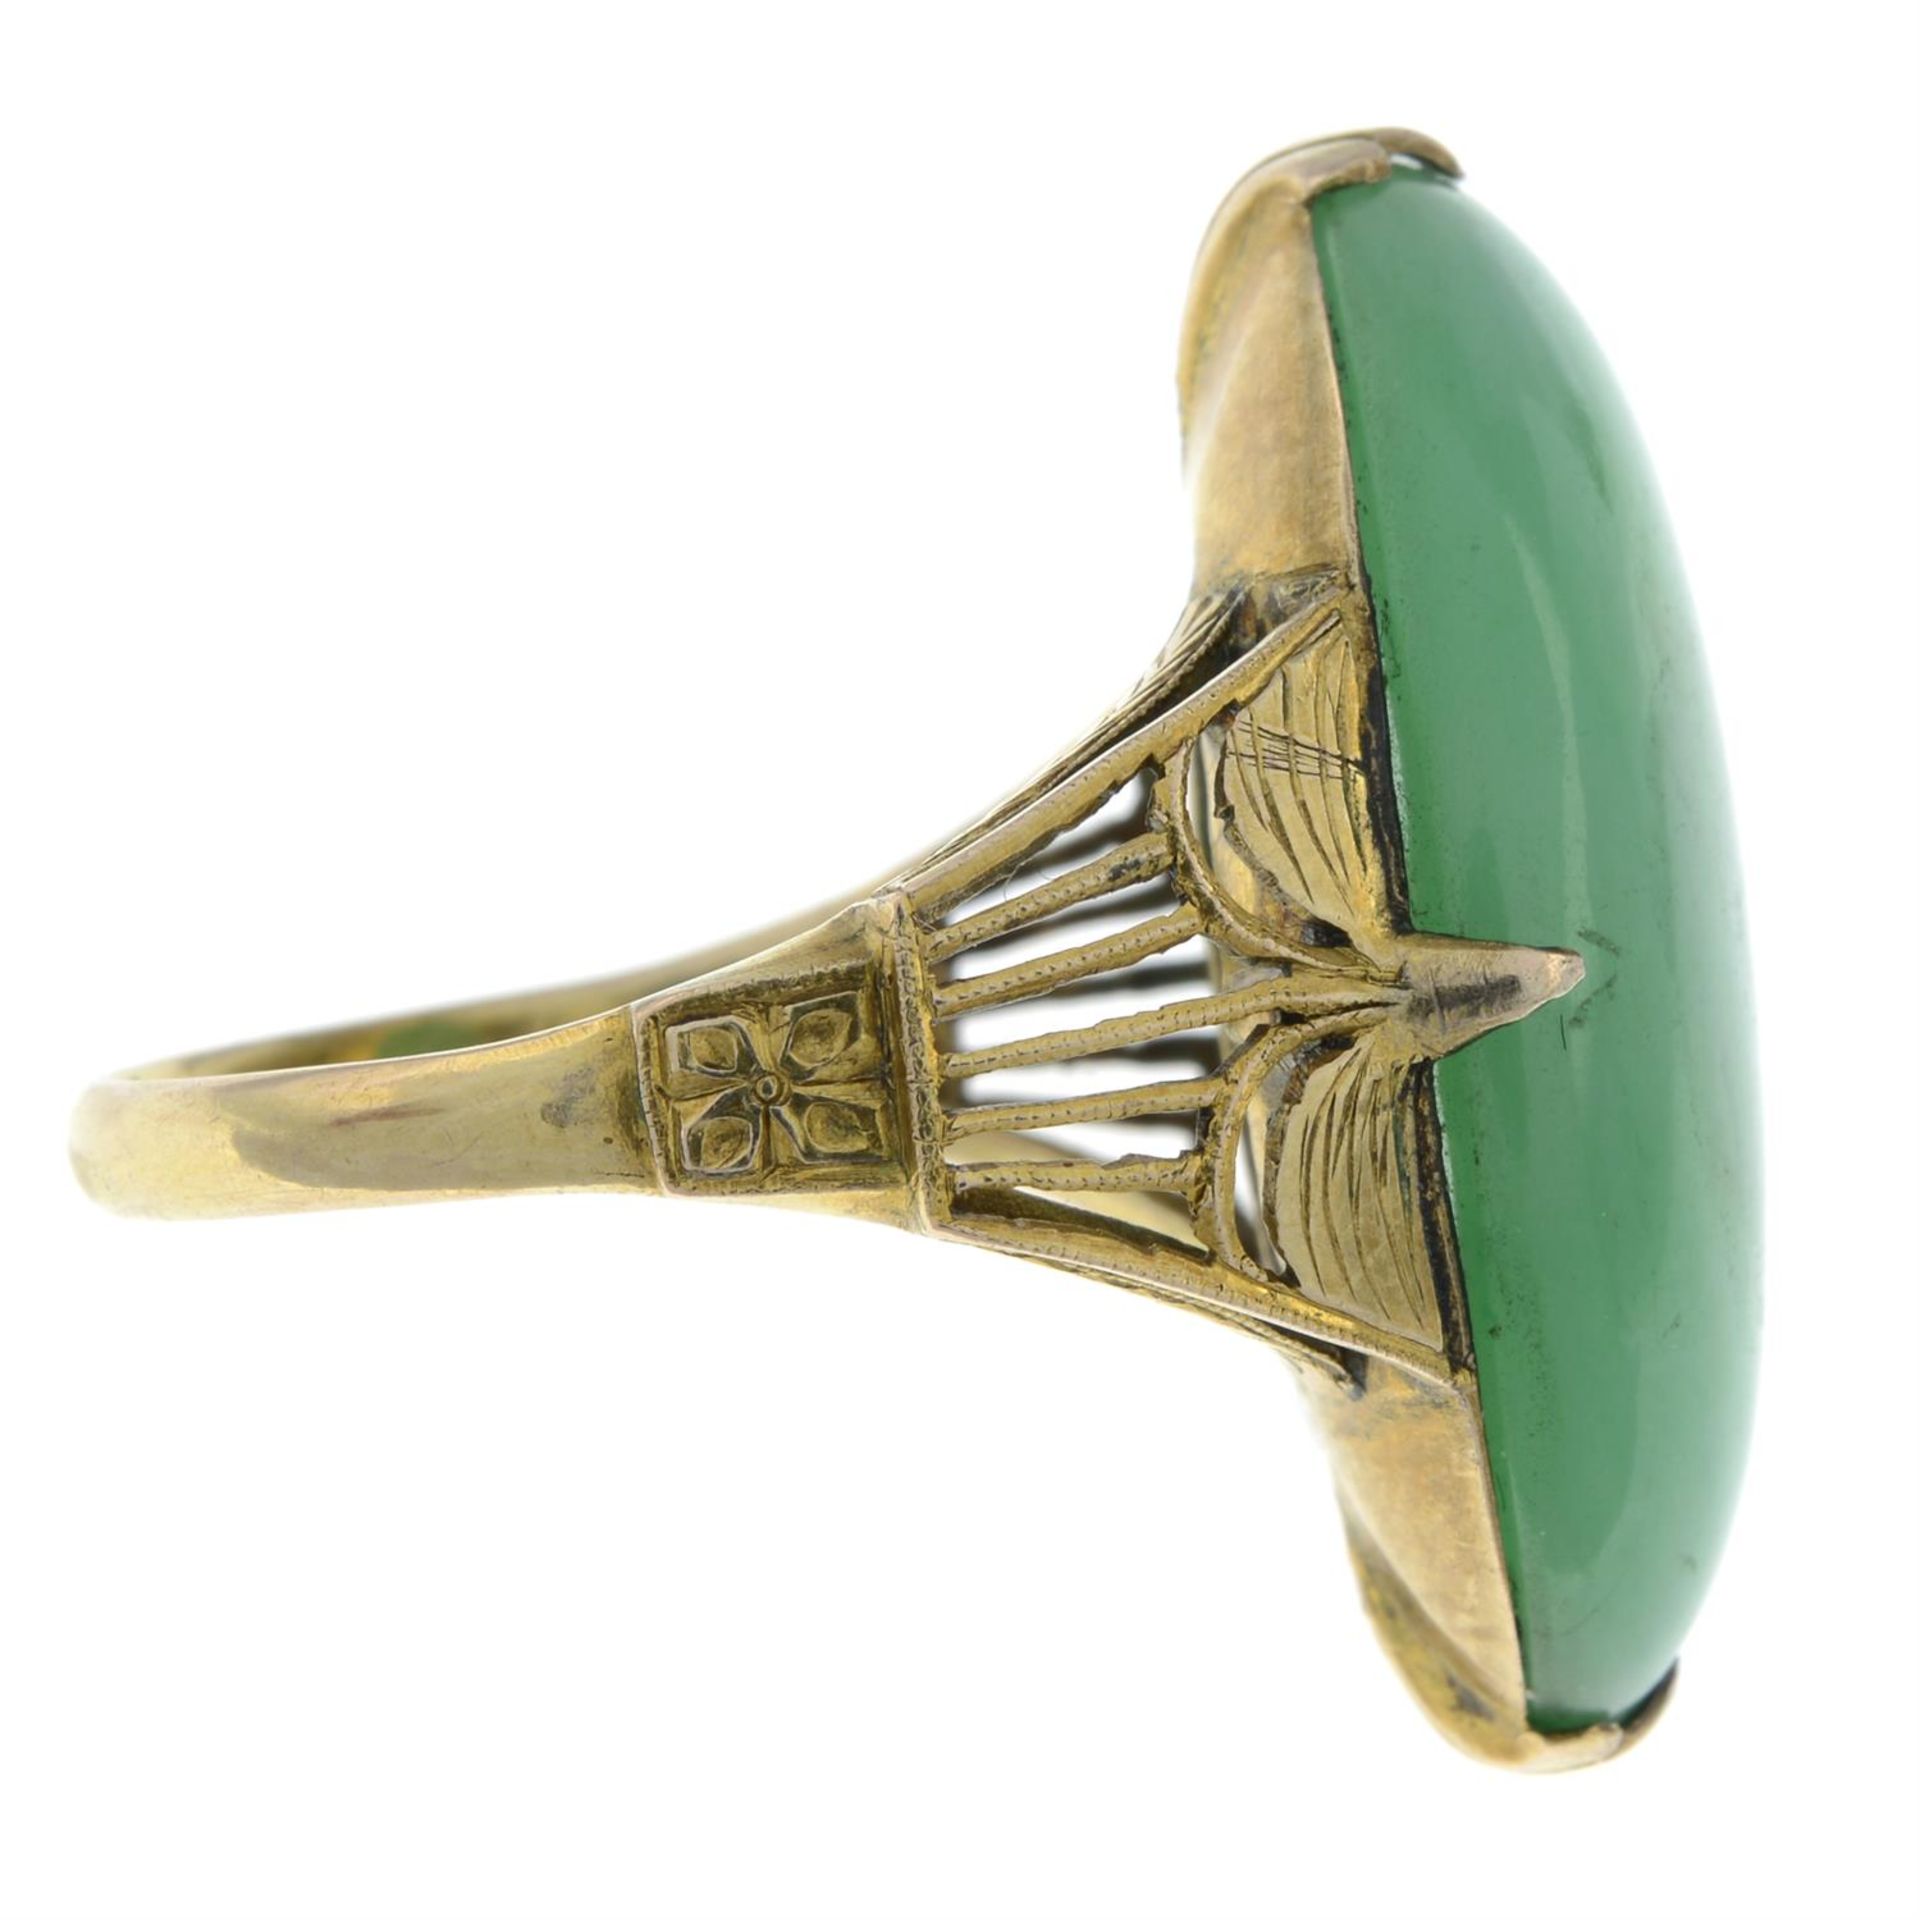 Mid 20th century gold jadeite jade ring - Image 5 of 5